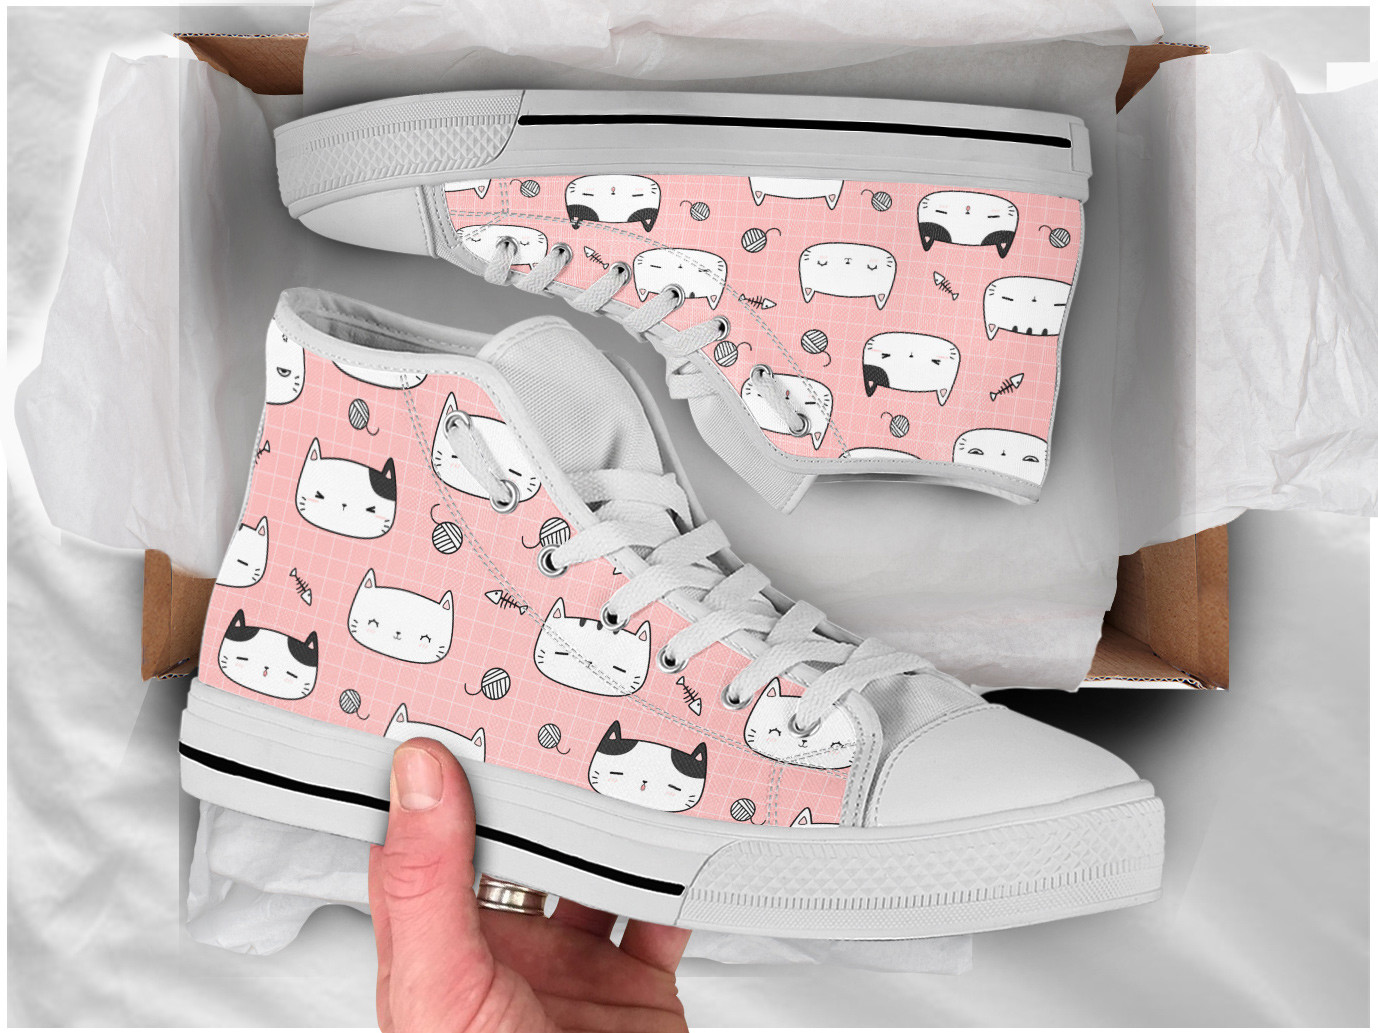 Cat Print Kawaii Shoes | Custom High Top Sneakers For Kids & Adults